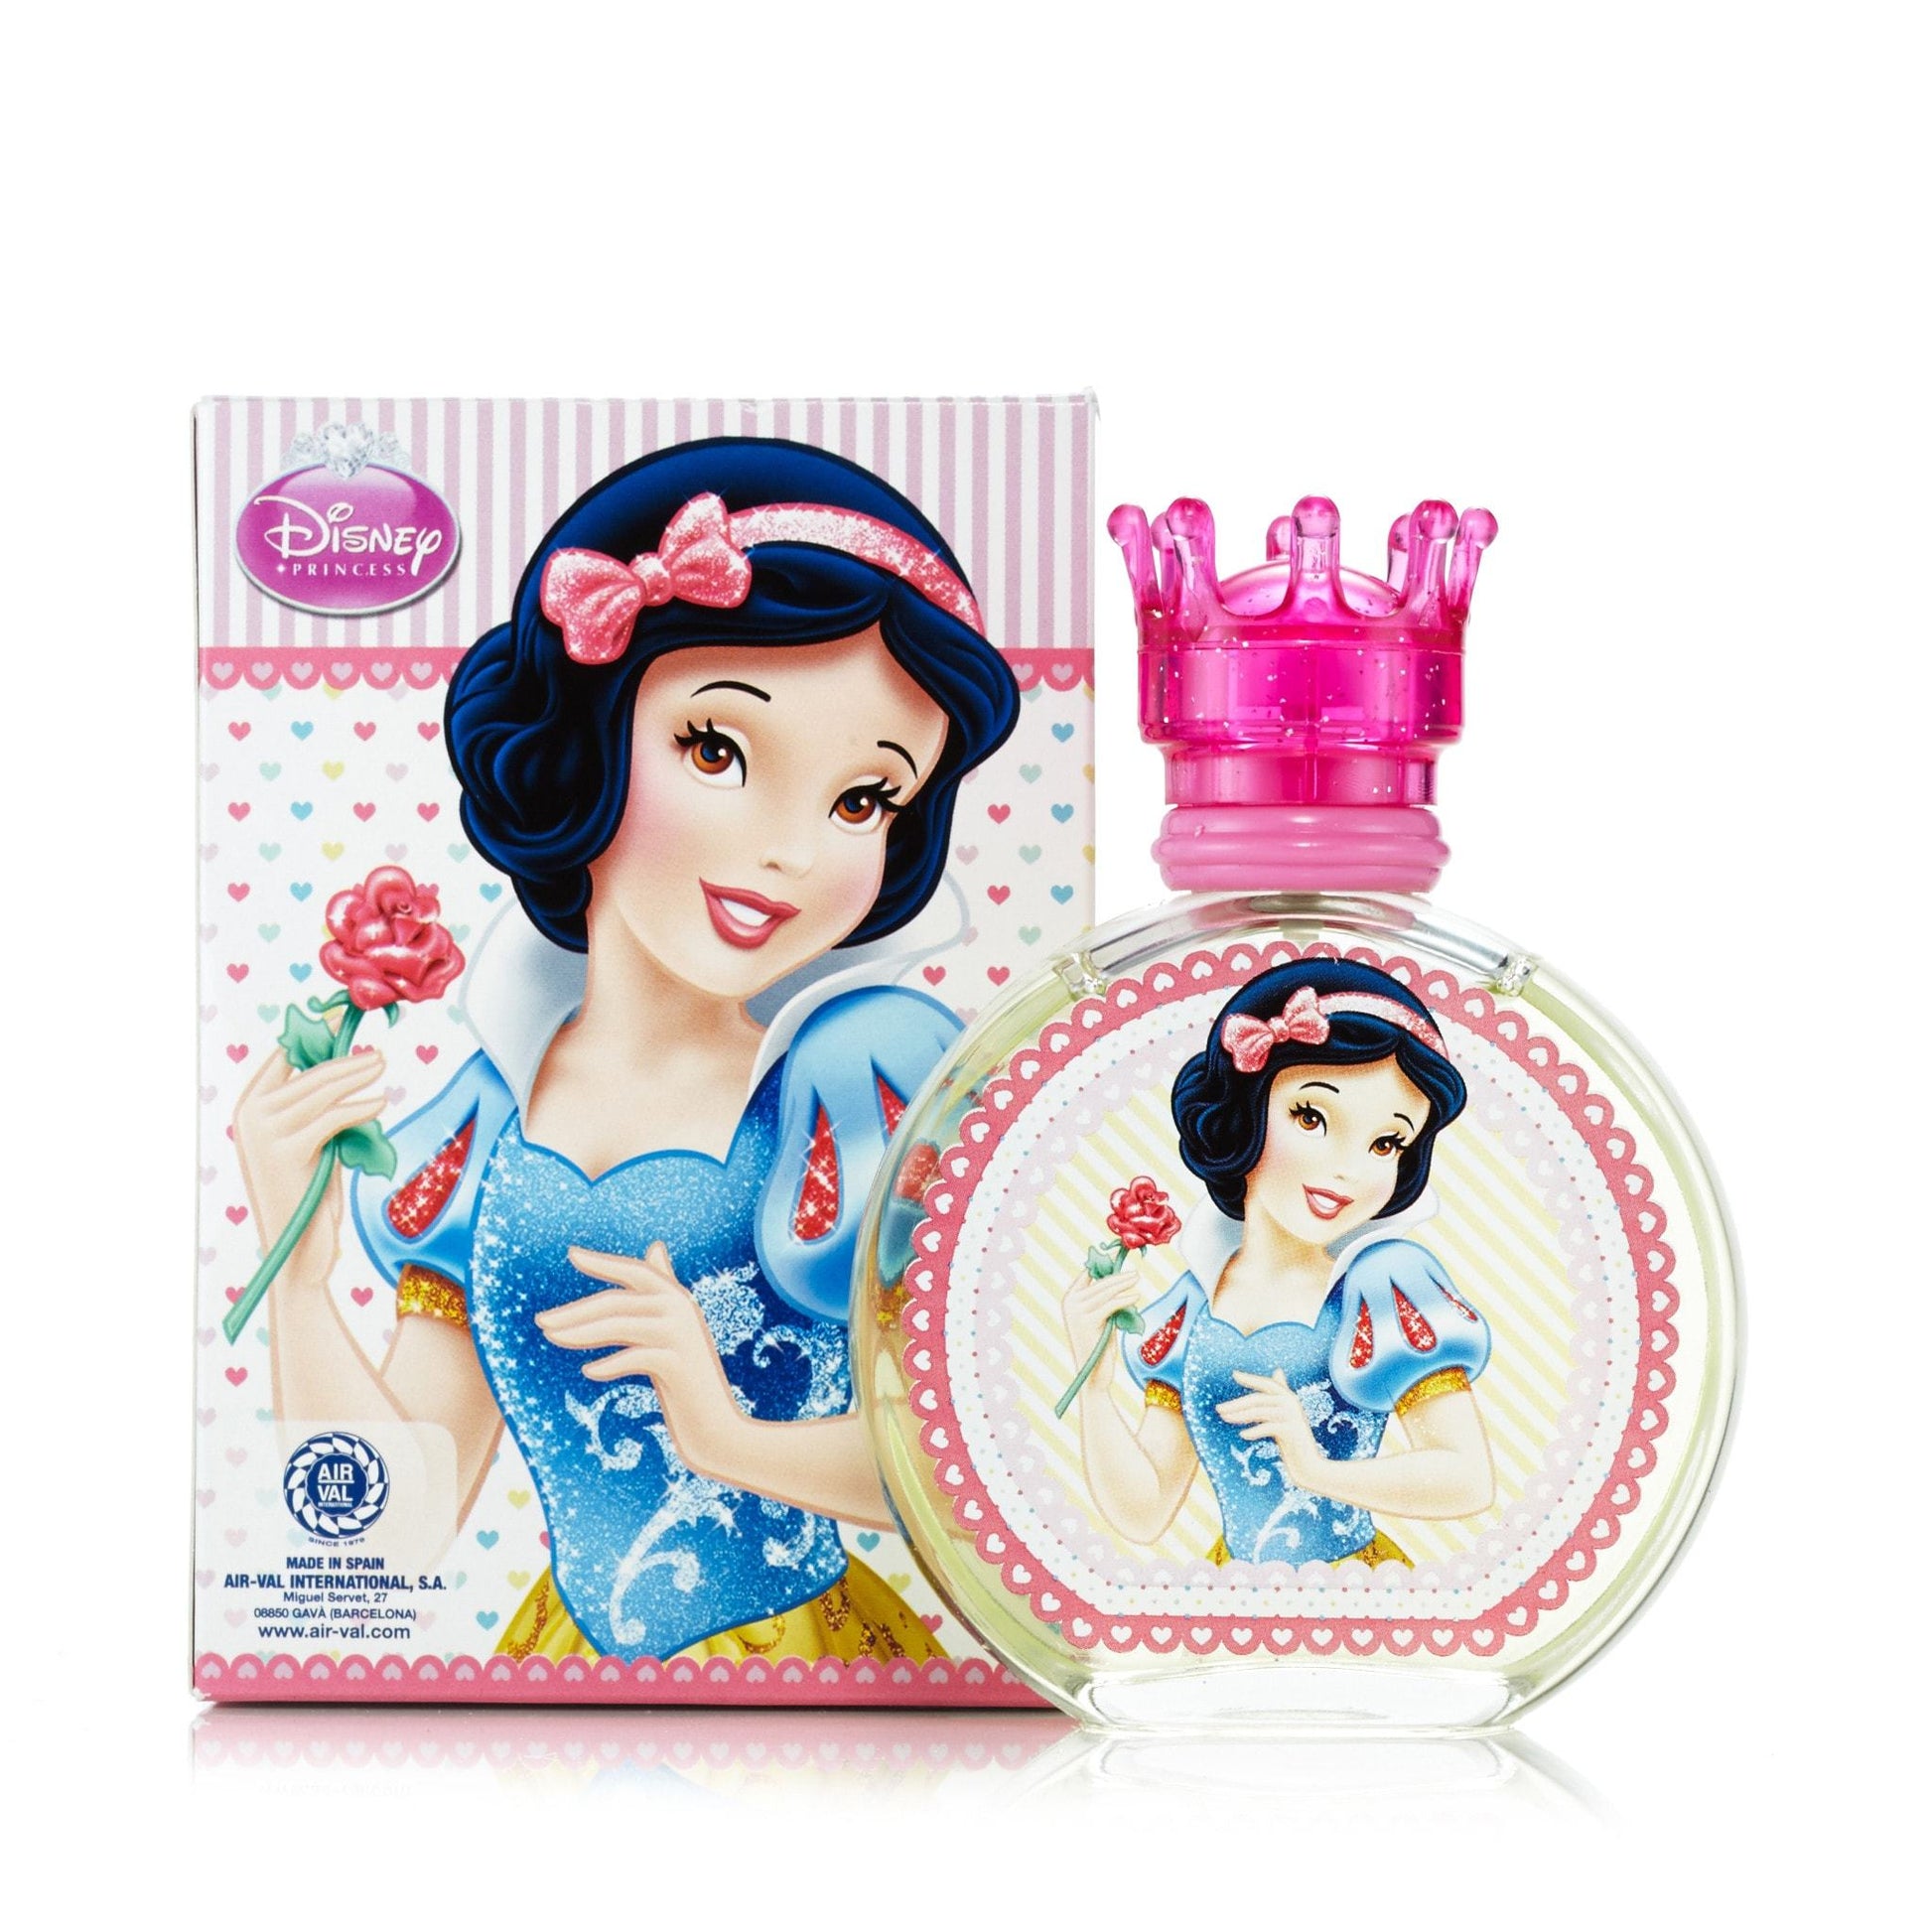 Snow White Eau de Toilette Spray for Girls by Disney, Product image 1